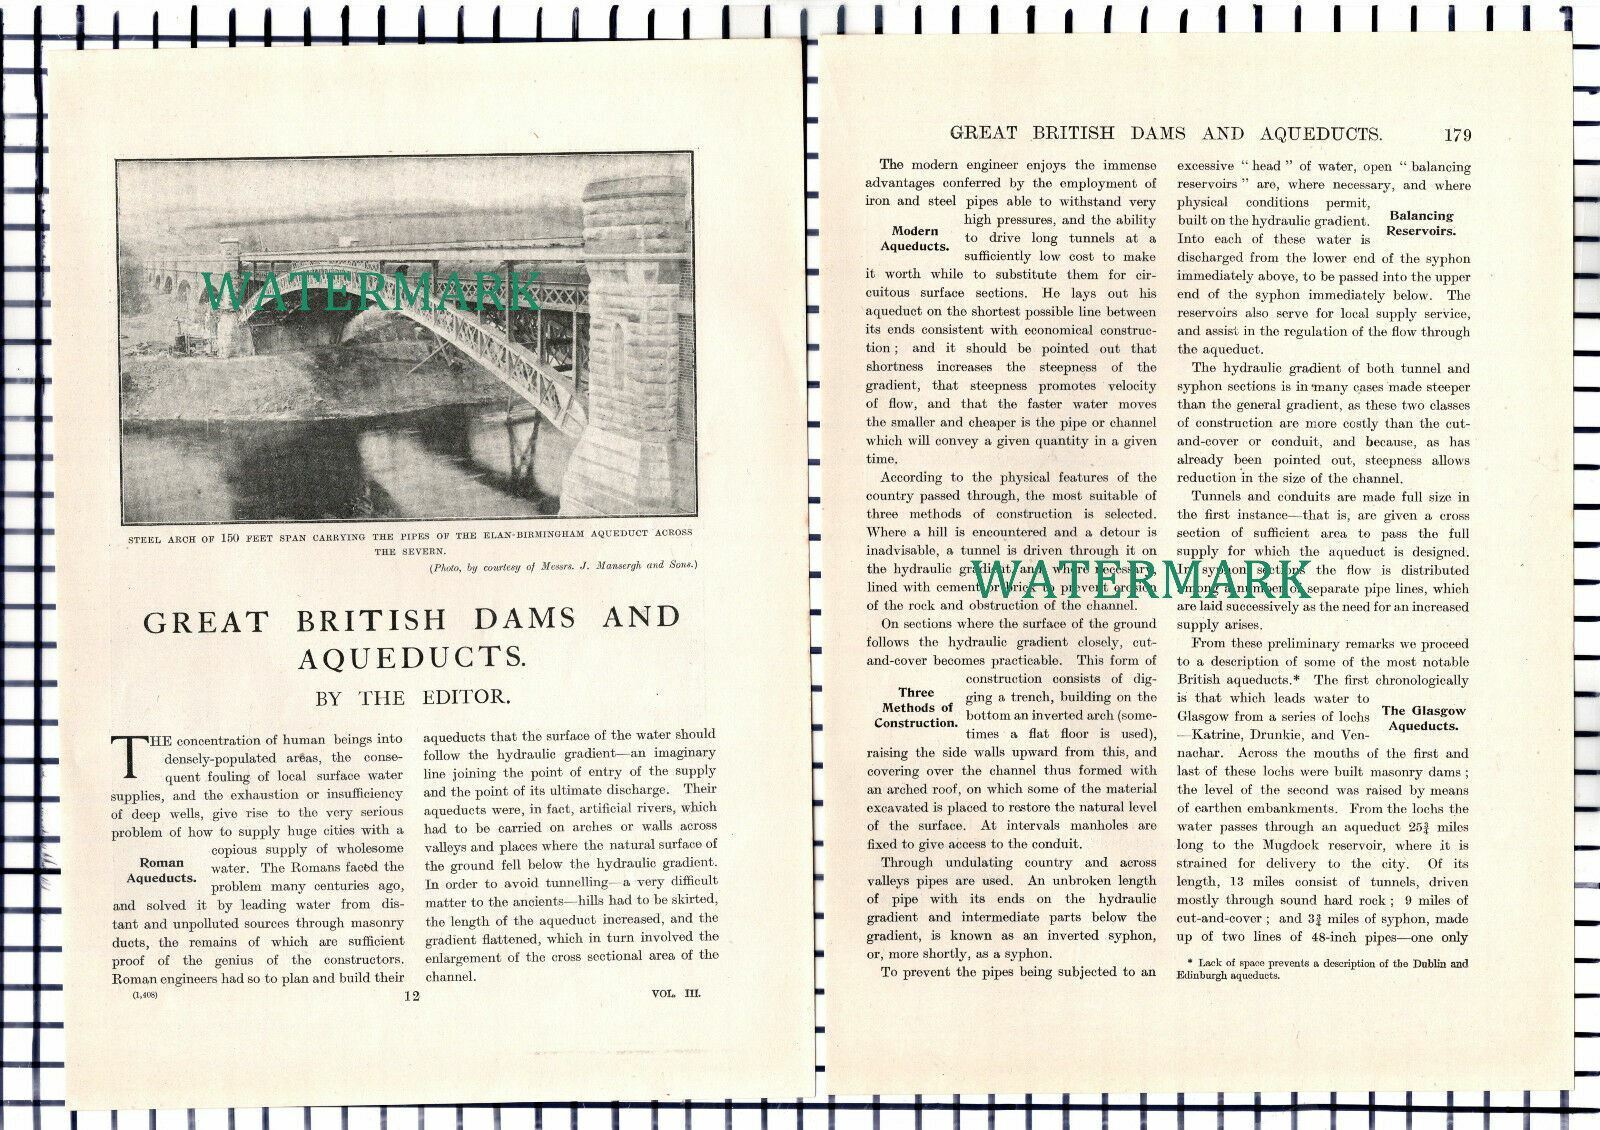 (8423) Great British Dams And Aqueducts Elan Birmingham - c.1930s Article